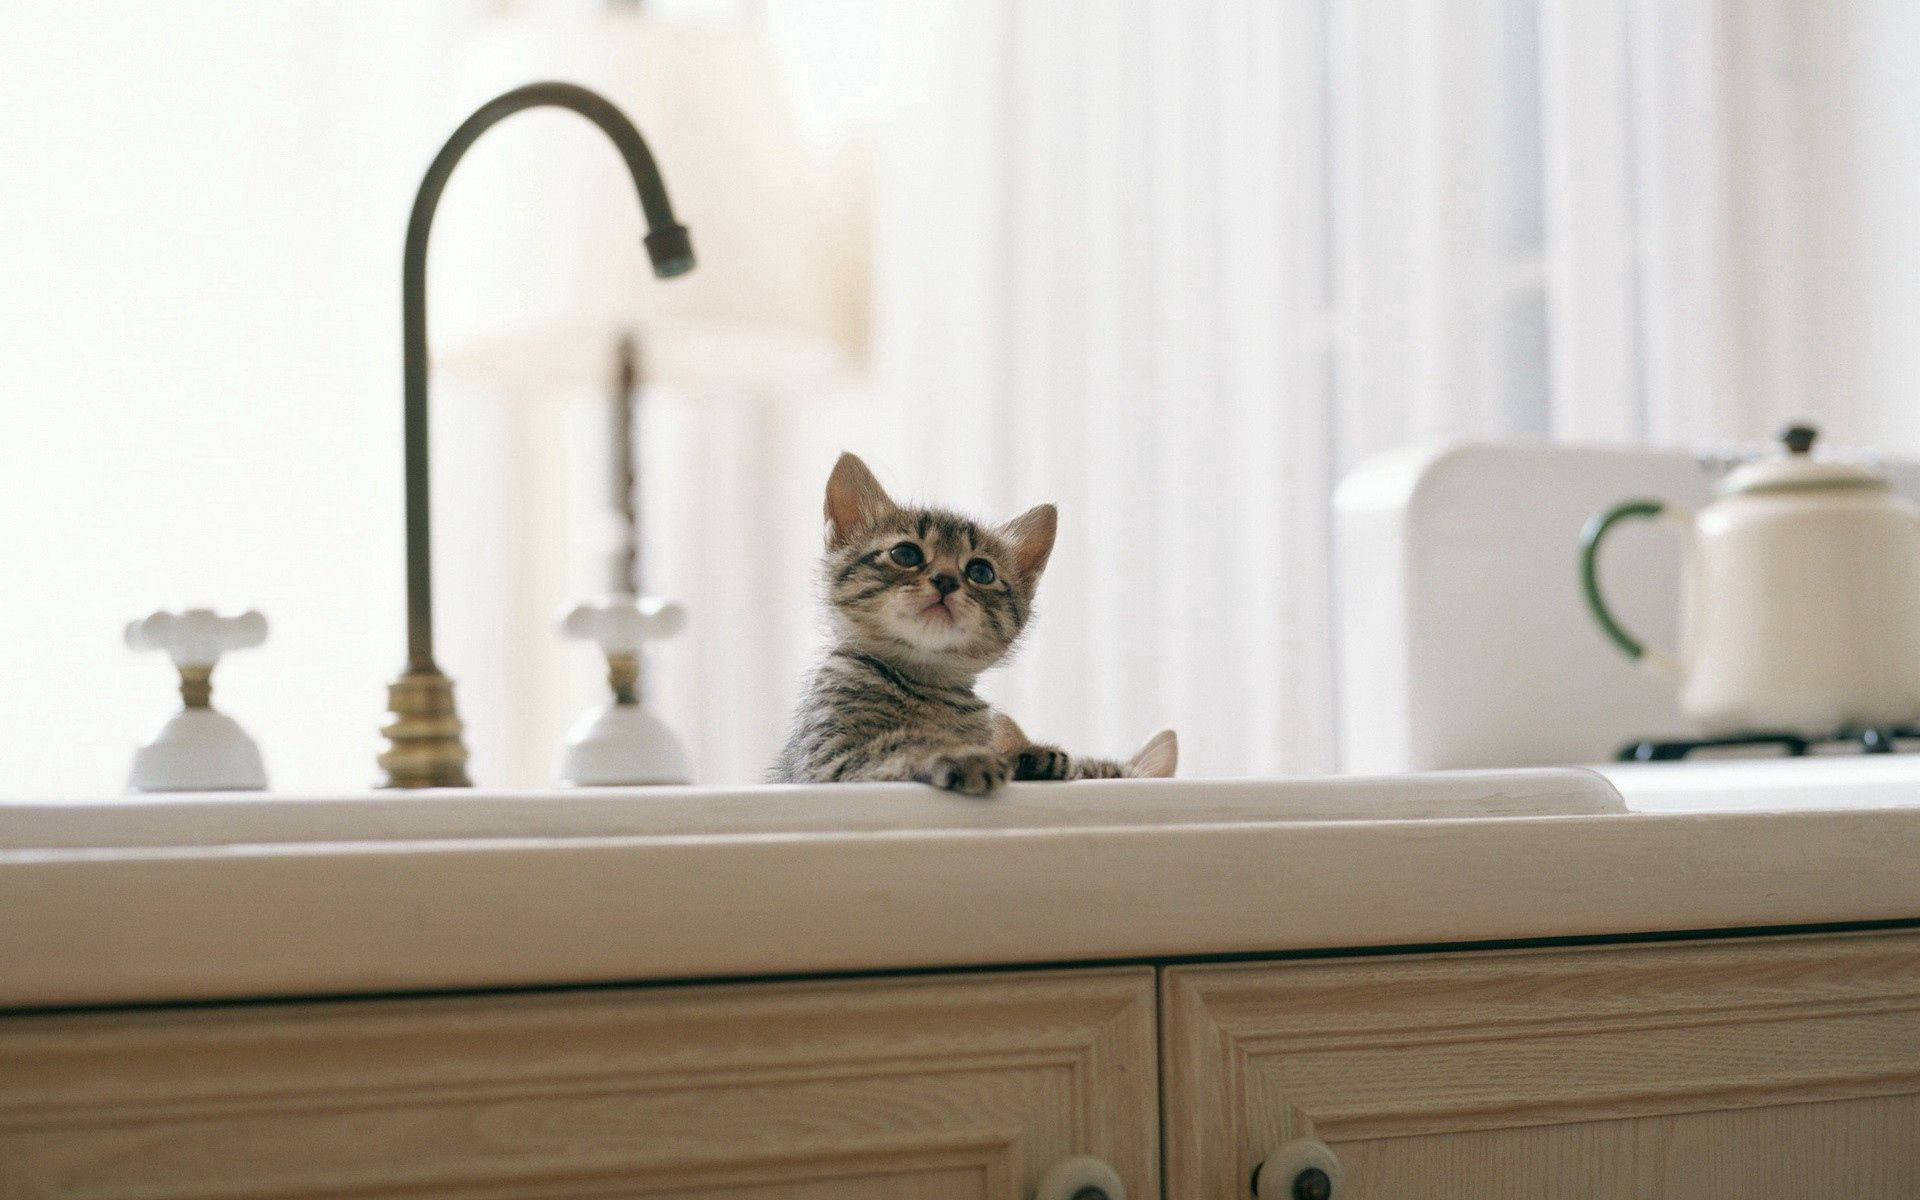 A kitten finds comfort in the bathroom sink Wallpaper